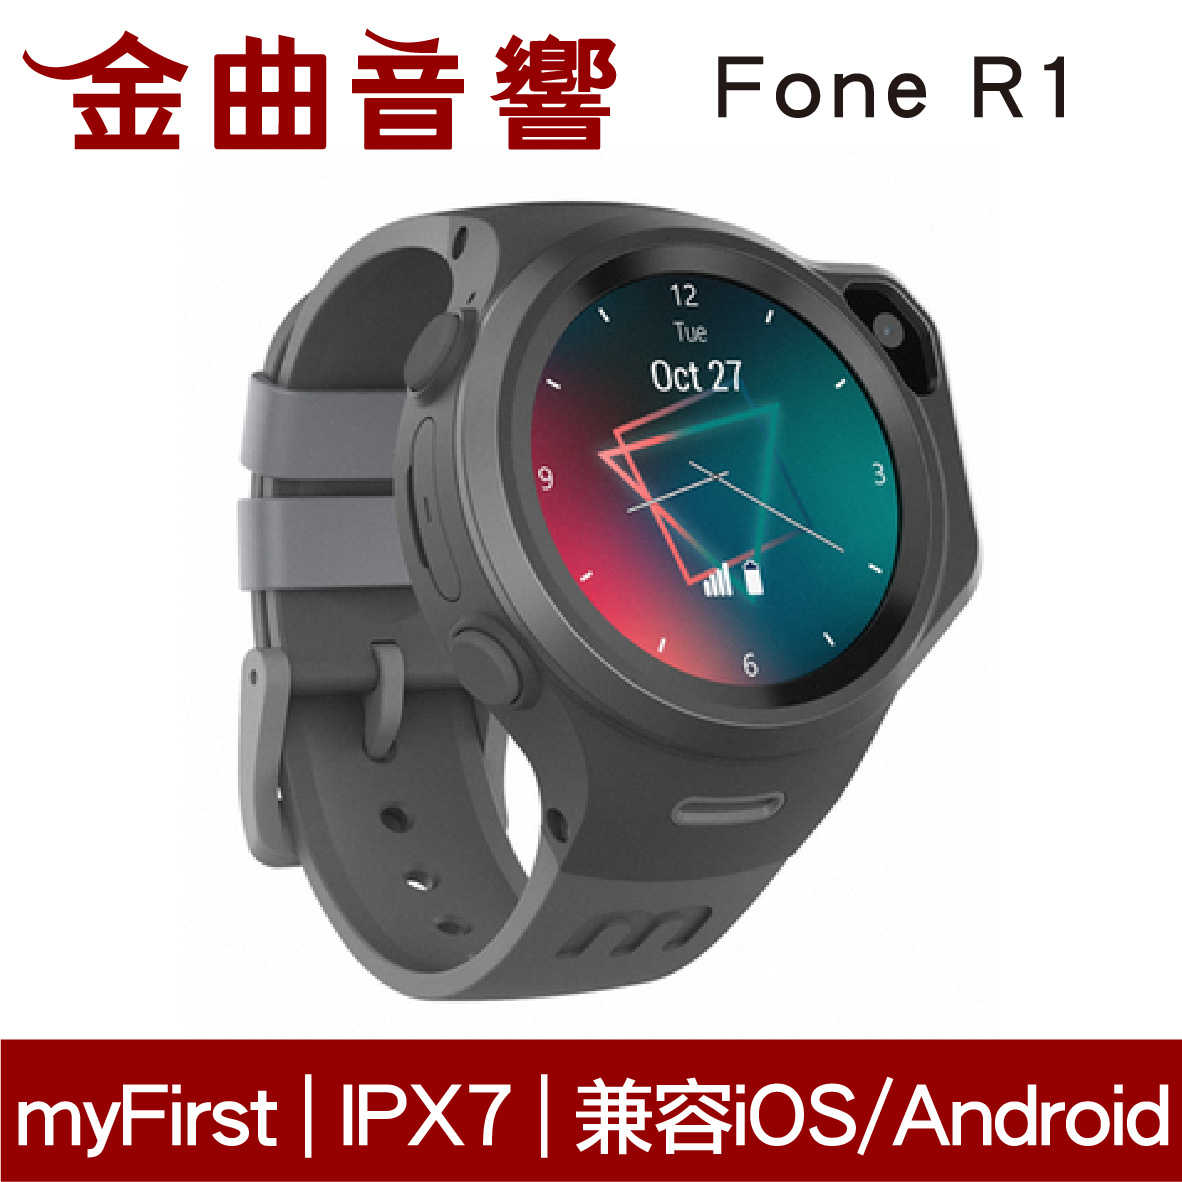 myFirst Fone R1 黑色 視訊通話 IPX7 GPS定位 一鍵求救 4G 智慧兒童手錶 | 金曲音響